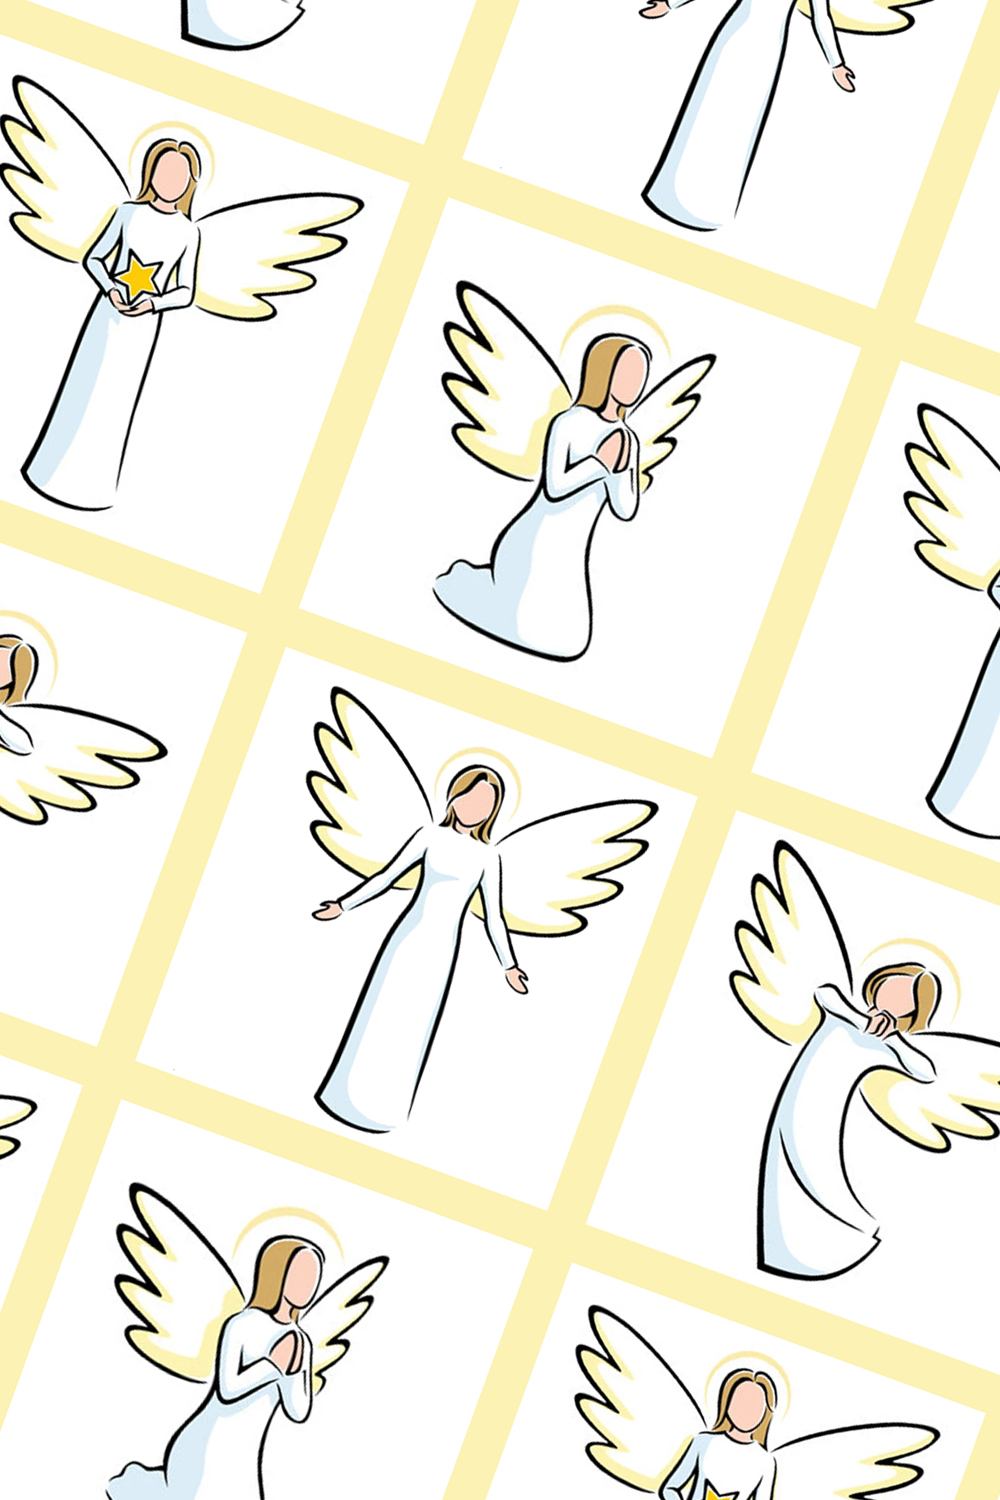 Angels vector cartoon clipart illustration of pinterest.